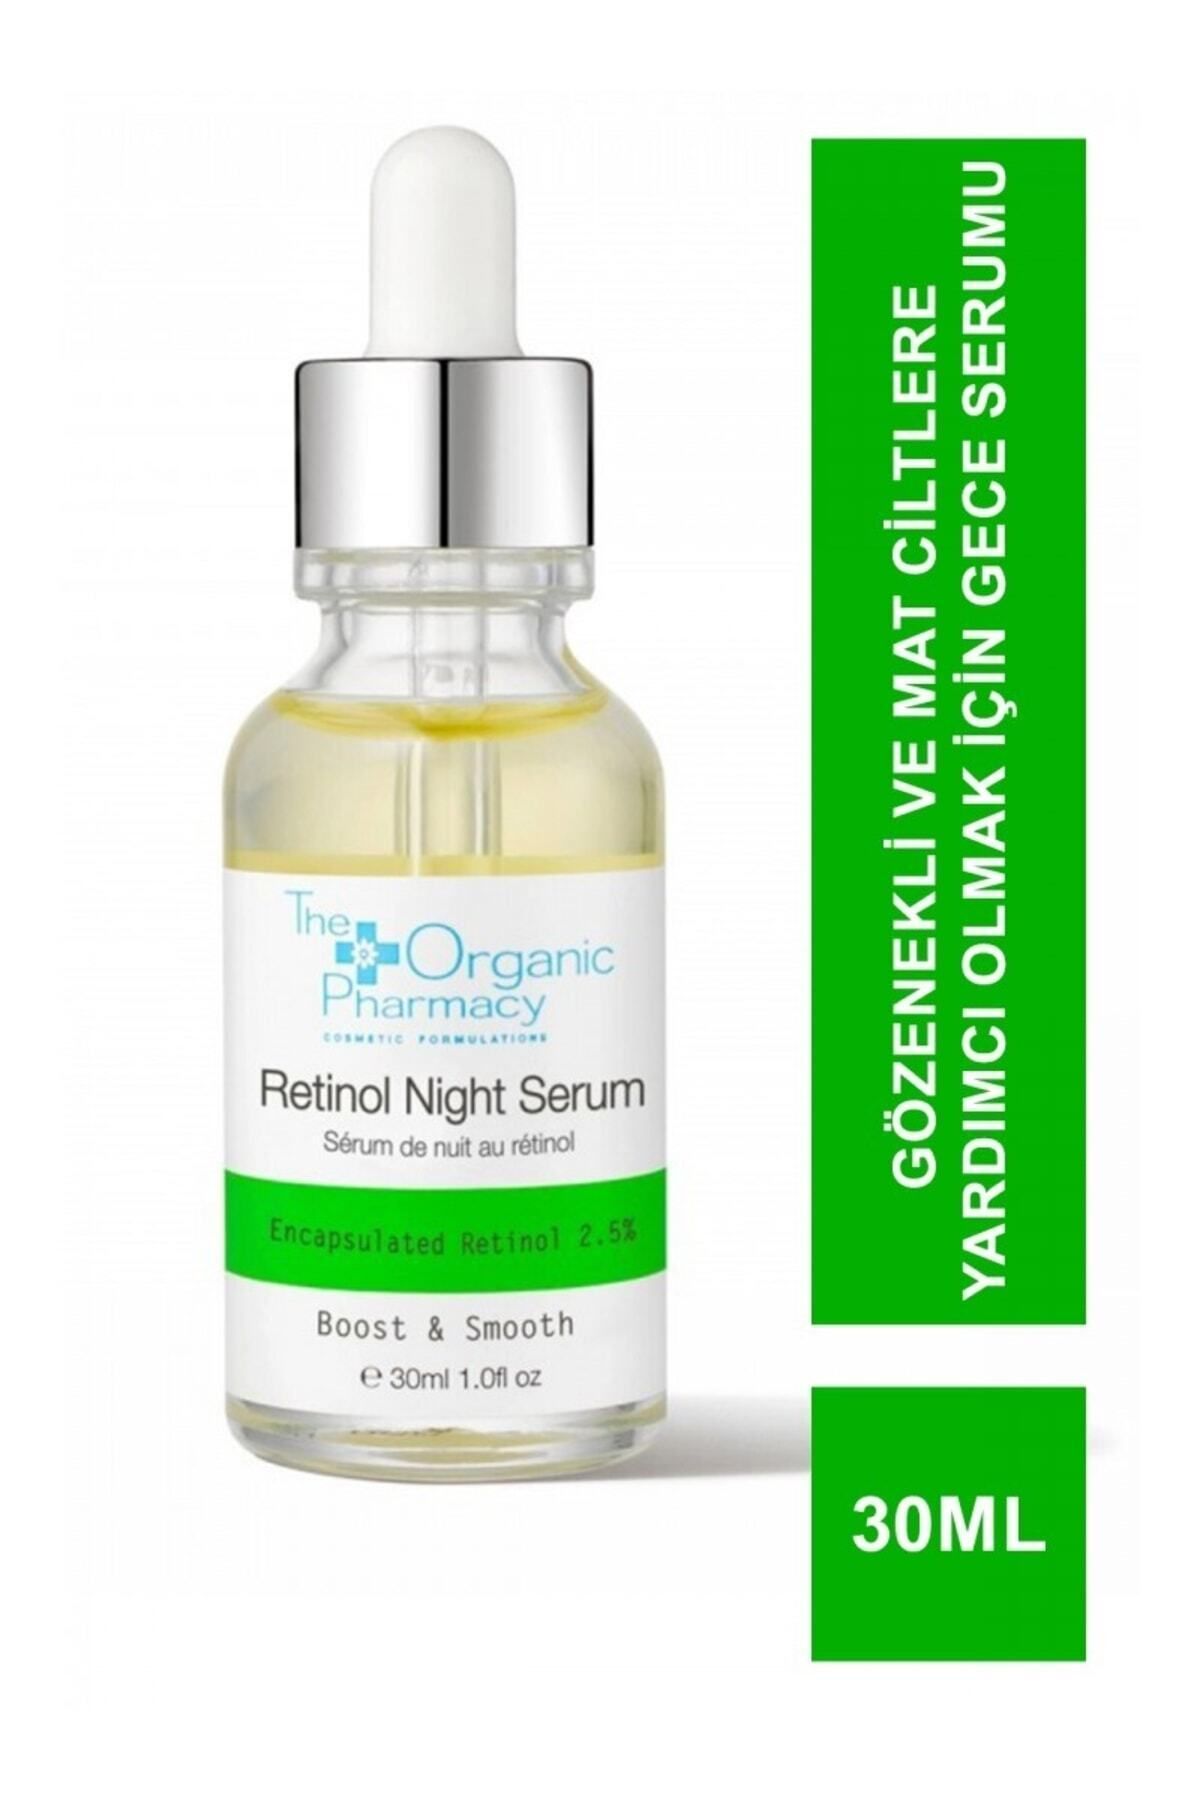 The Organic Pharmacy Anti Aging Organic Night Serum with Retinol 30 ml DKÜRN673